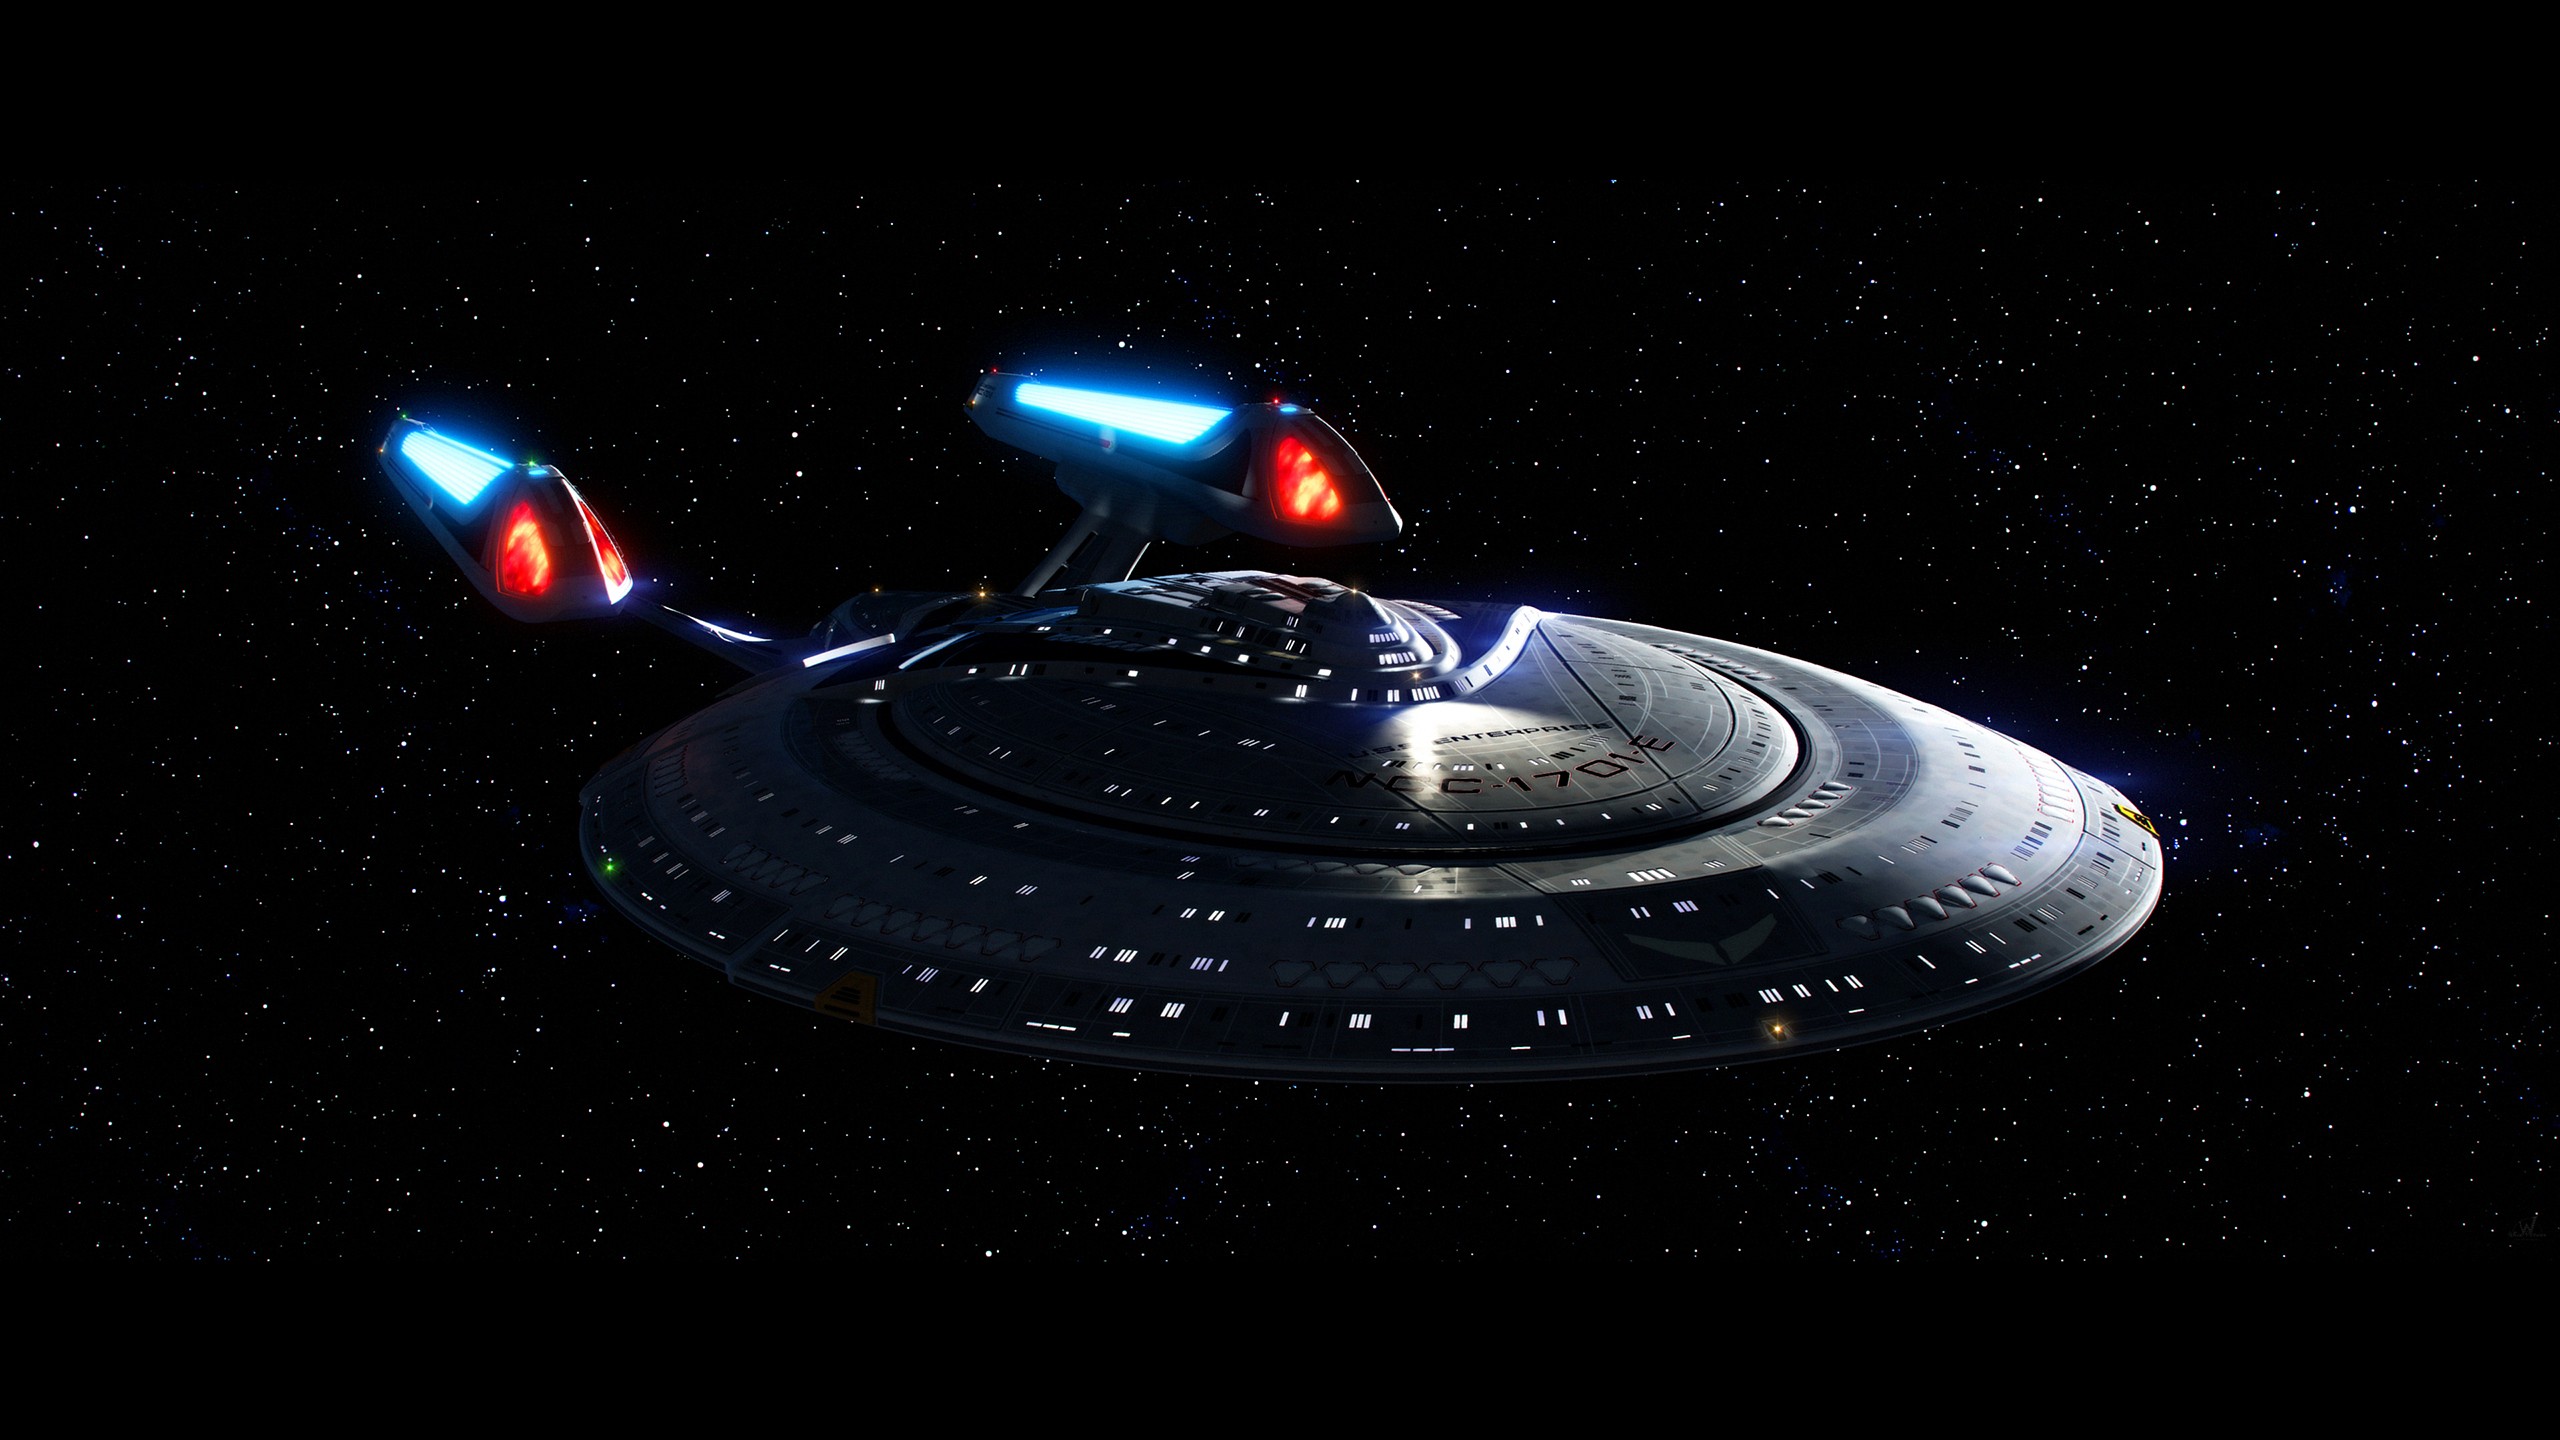 General 2560x1440 Star Trek space Star Trek Ships spaceship vehicle NCC-1701 enterprise e USS Enterprise NCC-1701 e TV series